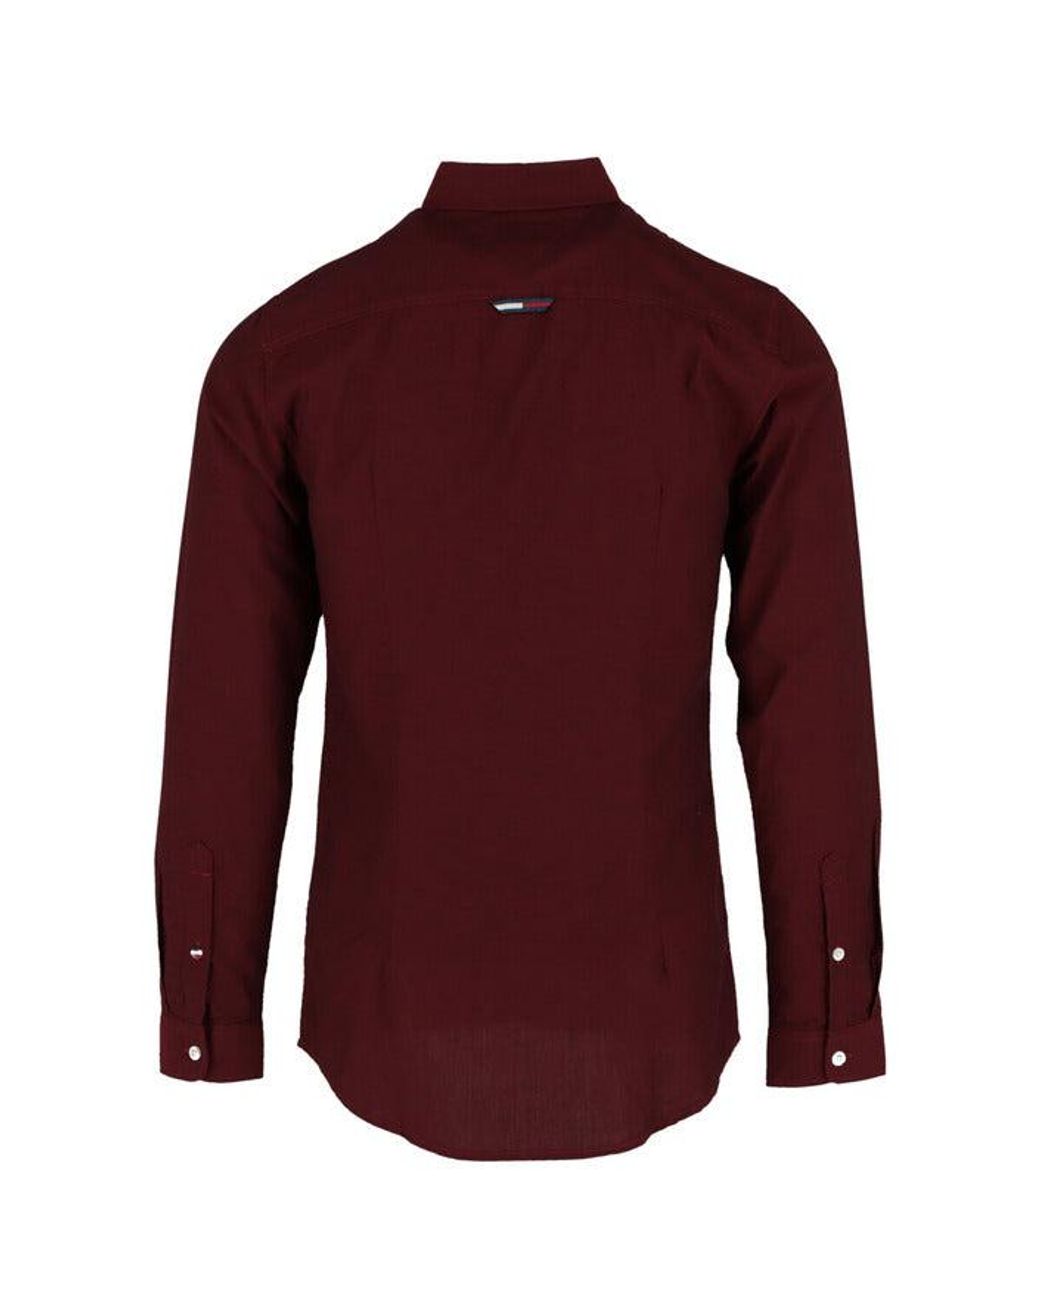 TOMMY HILFIGER JEANS Denim Shirt Bordeaux 306555 in Red for Men - Save 21%  - Lyst